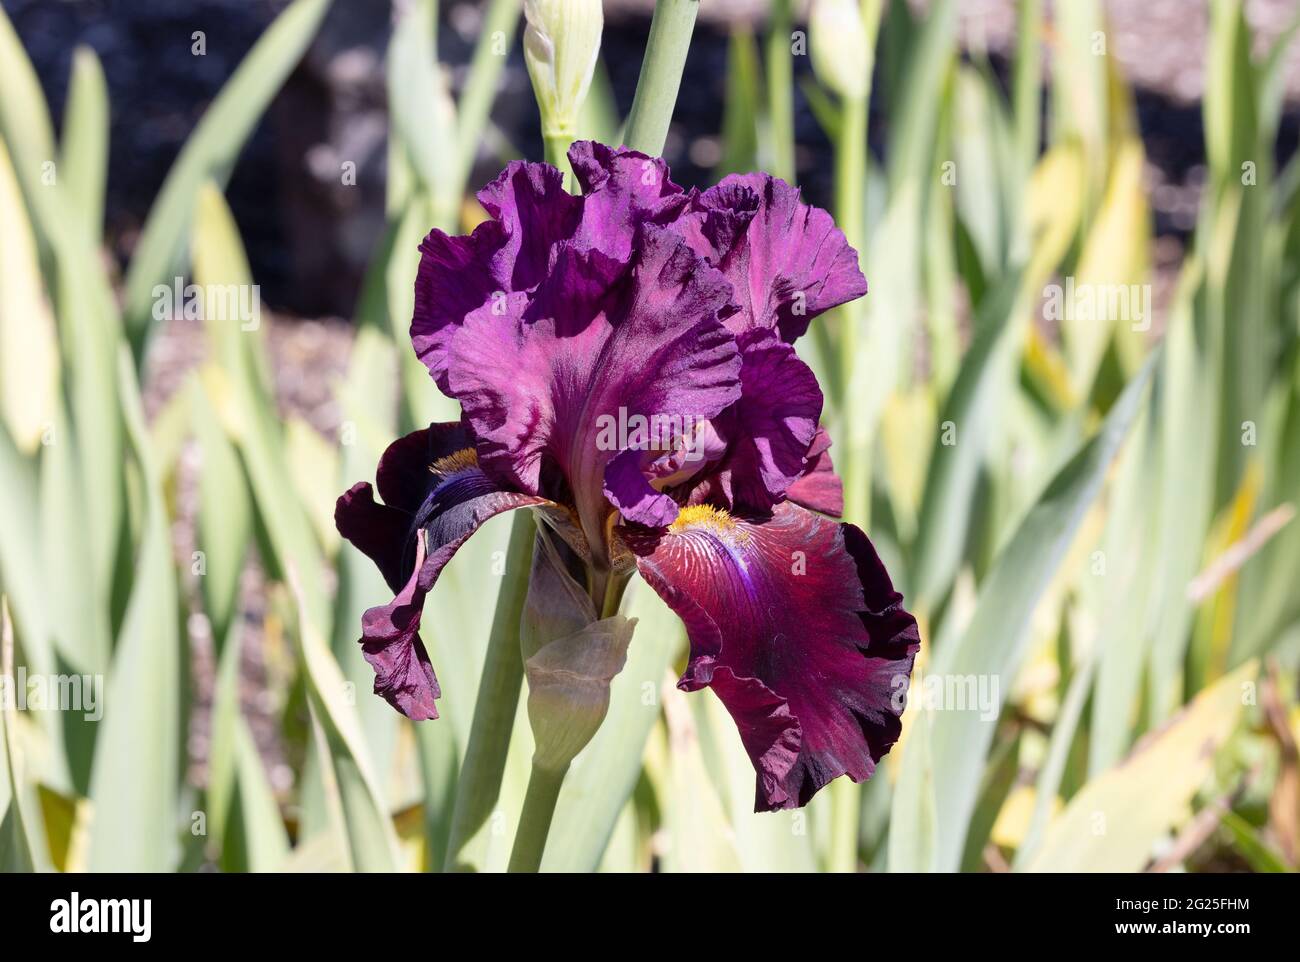 Iris Scarlet Ribbon, close up of the flower of a reddish - purple iris flowering in spring, UK Stock Photo